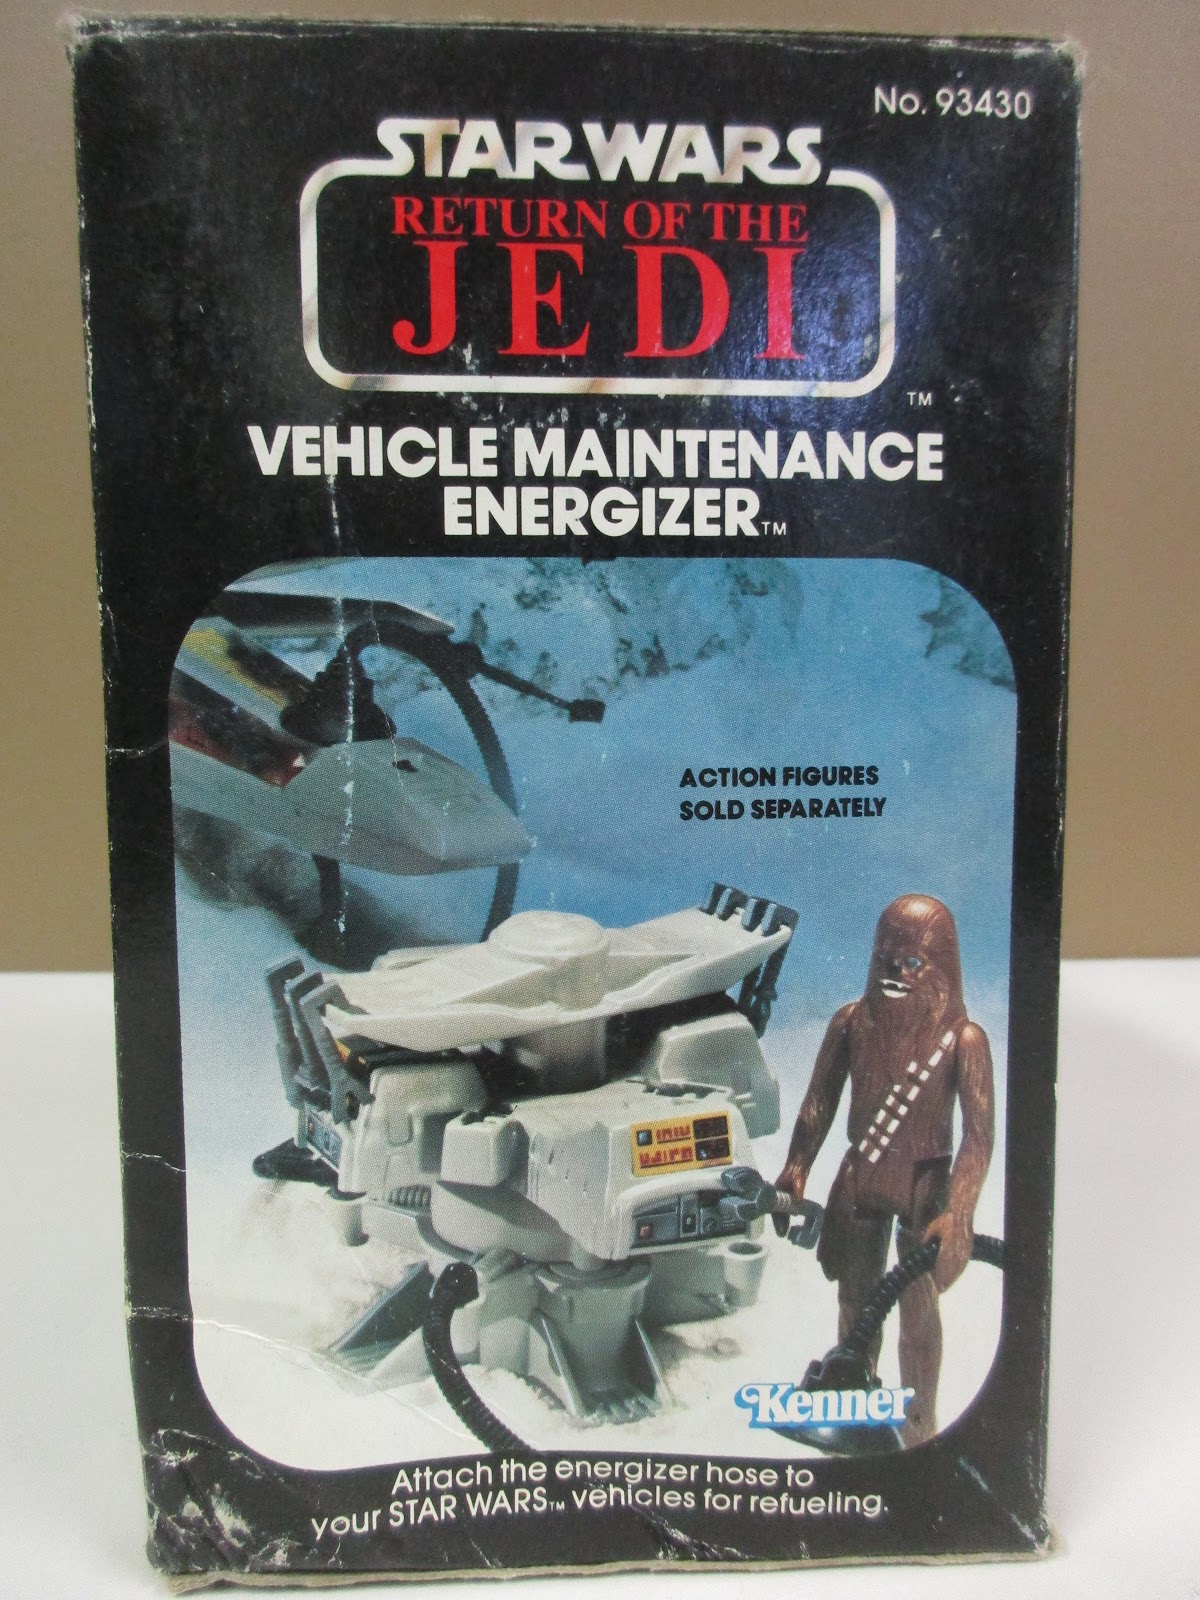 Star Wars Vintage Original Vehicle maintenance energizer Tool/spare part!